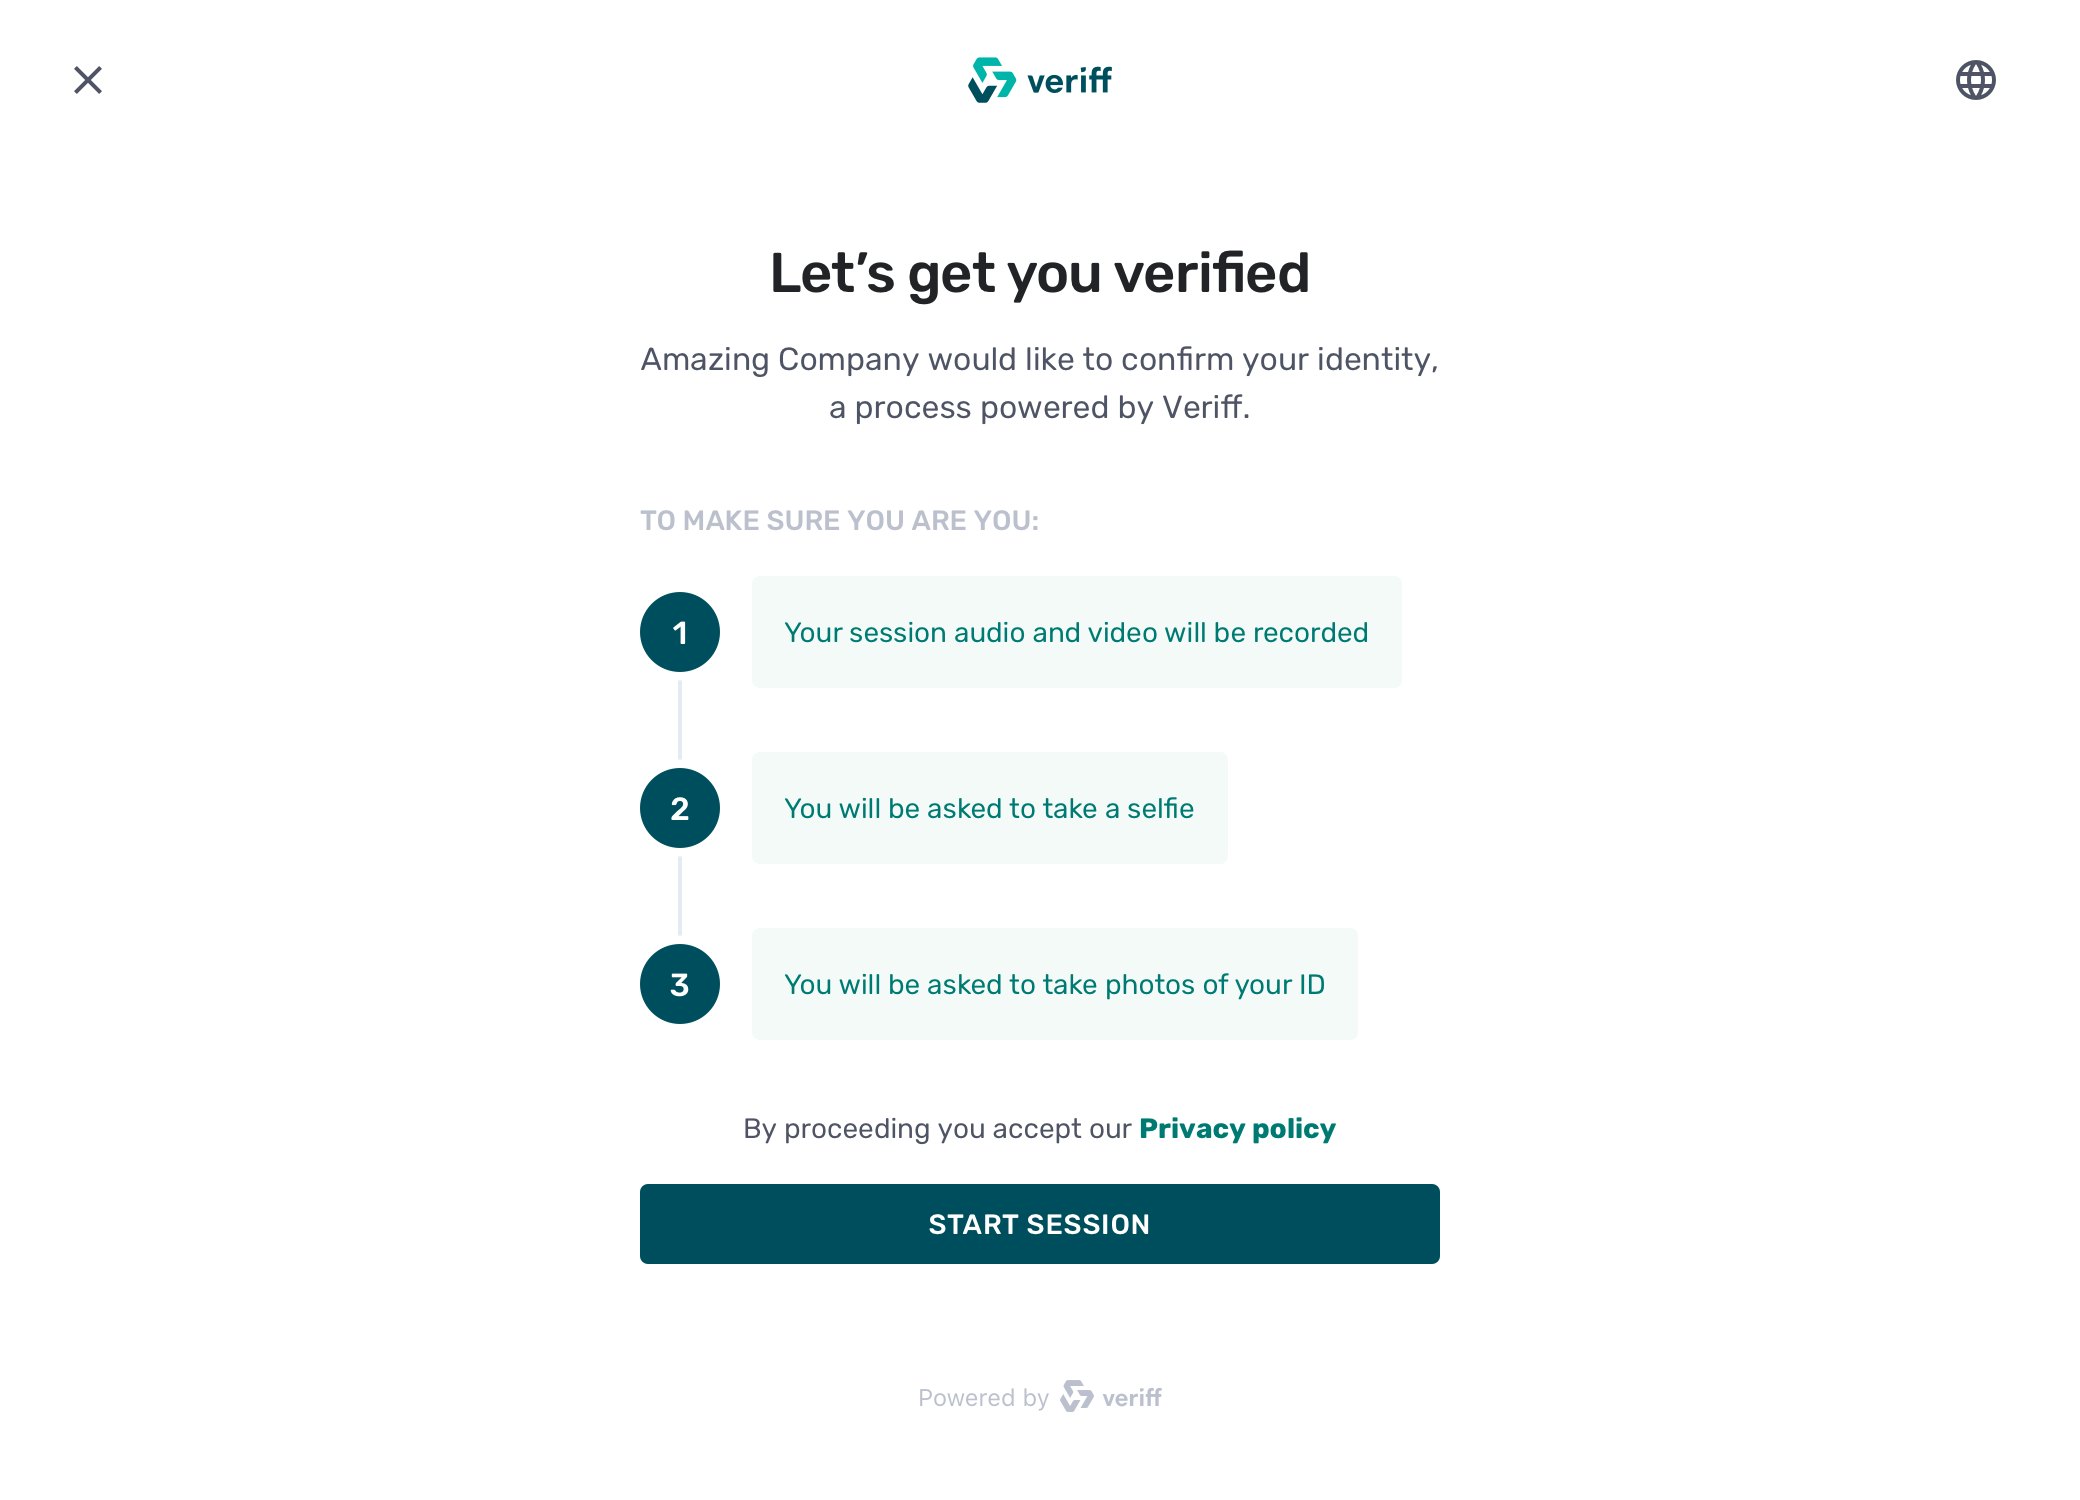 Veriff's new identity verification platform for web users